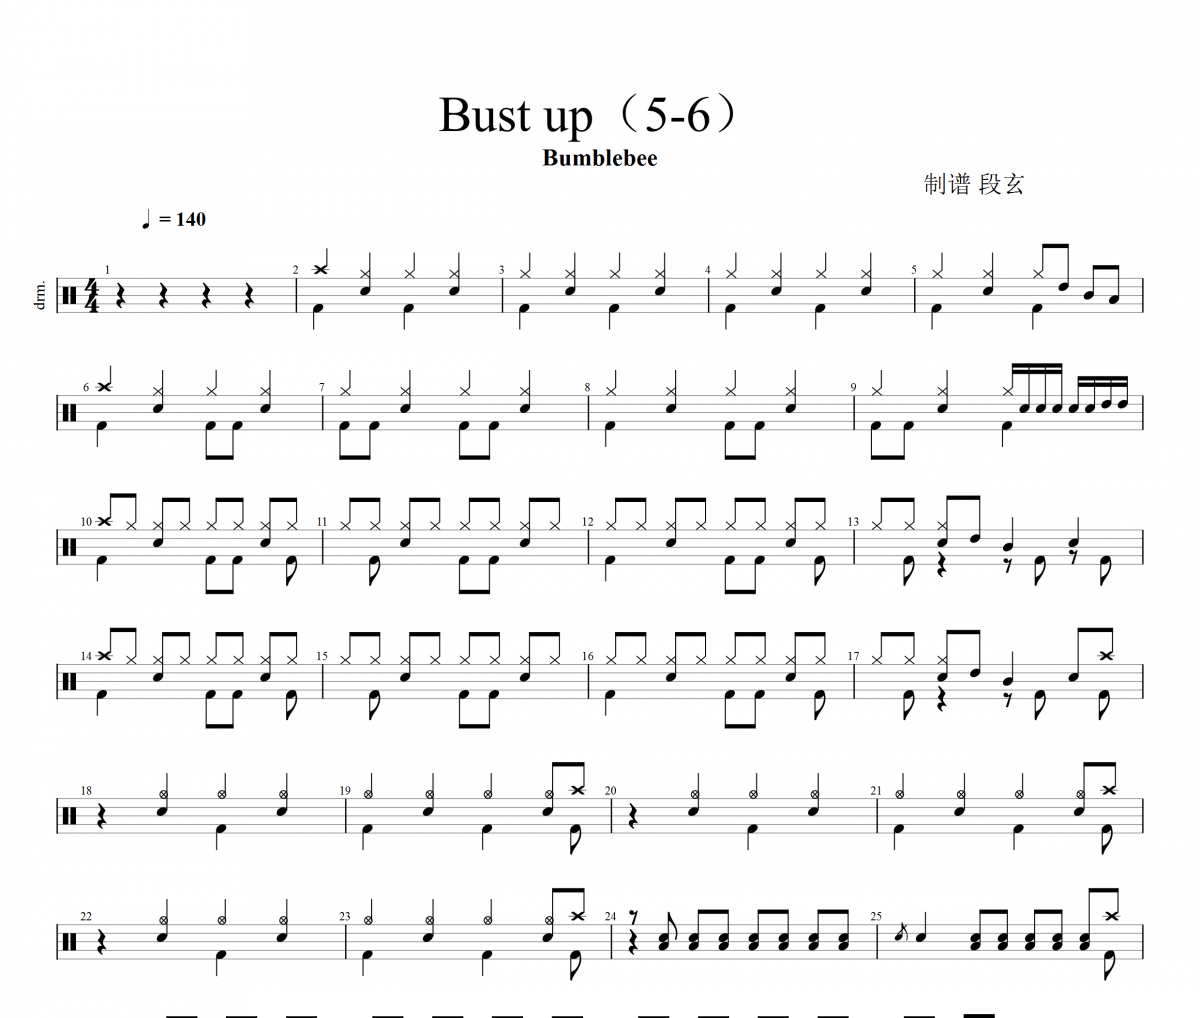 Bumblebee-Bust up架子鼓谱爵士鼓曲谱（5-6）级